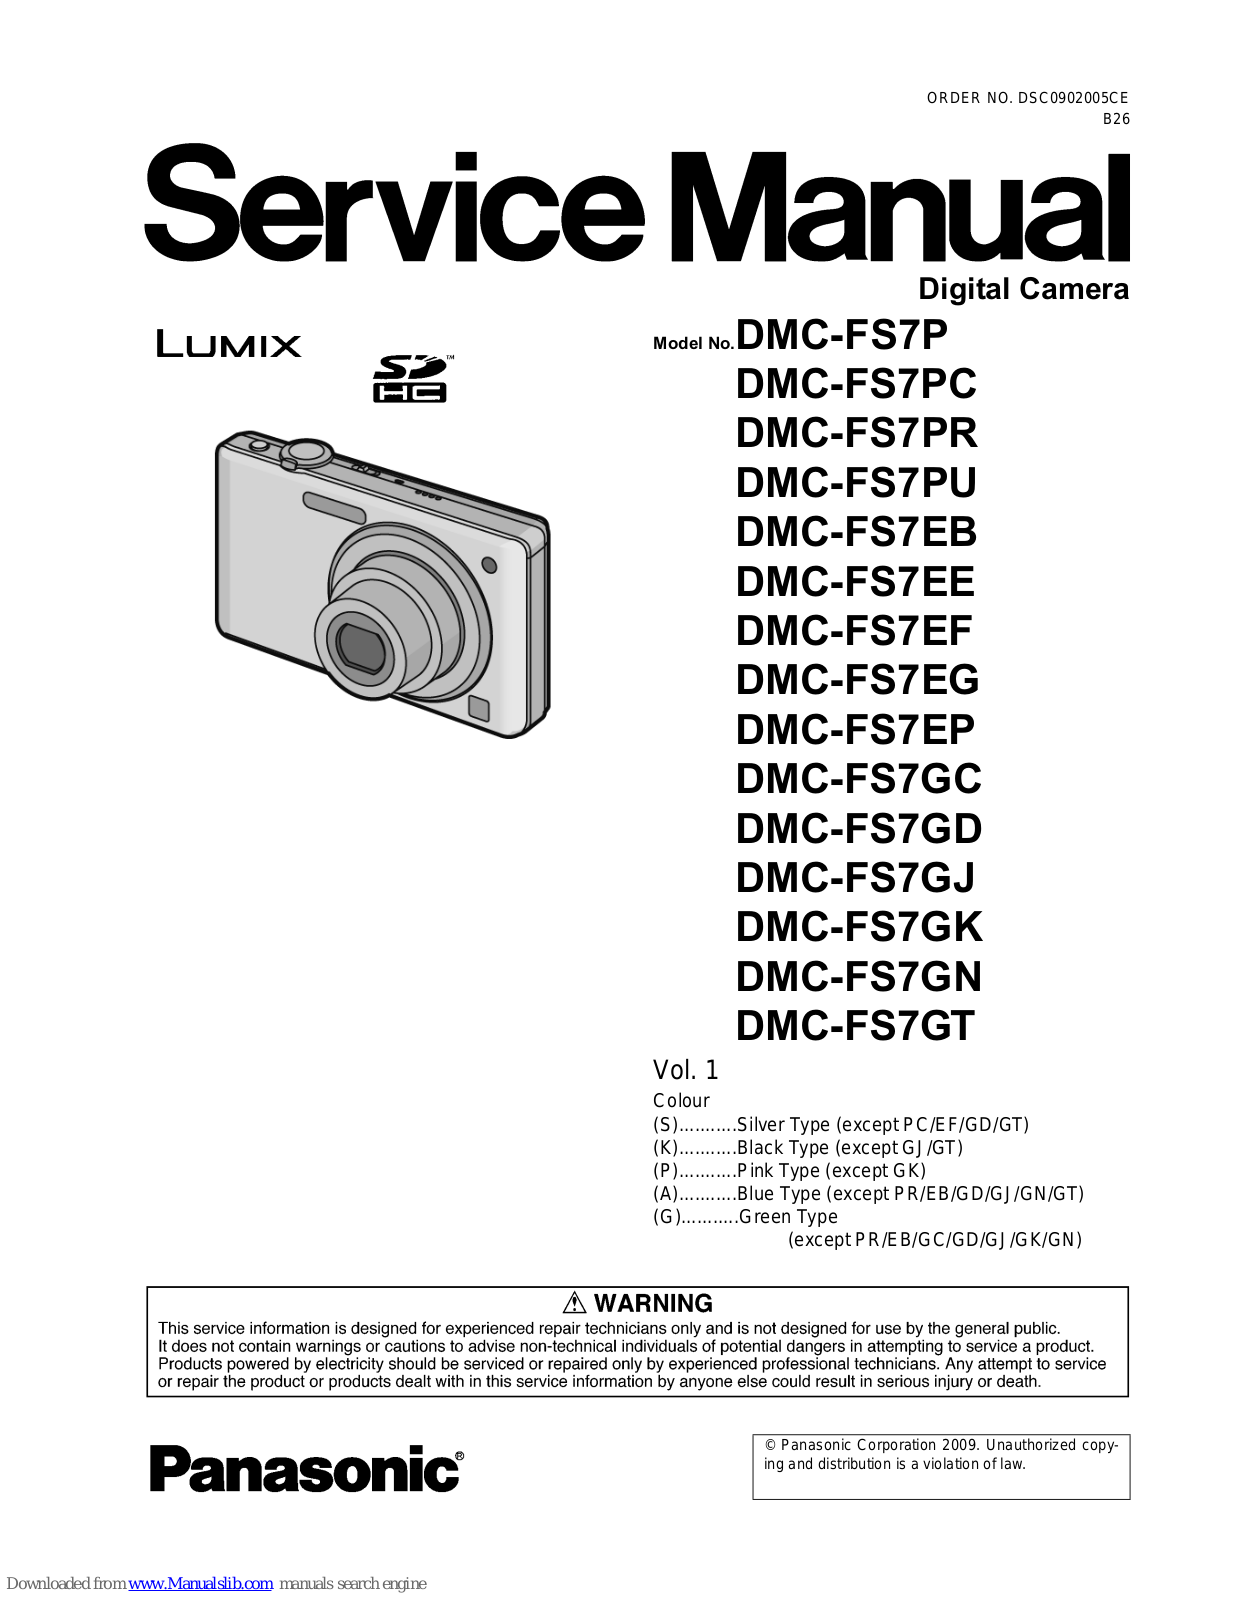 Panasonic Lumix DMC-FS7PC, Lumix DMC-FS7EB, Lumix DMC-FS7PR, Lumix DMC-FS7PU, Lumix DMC-FS7EE Service Manual